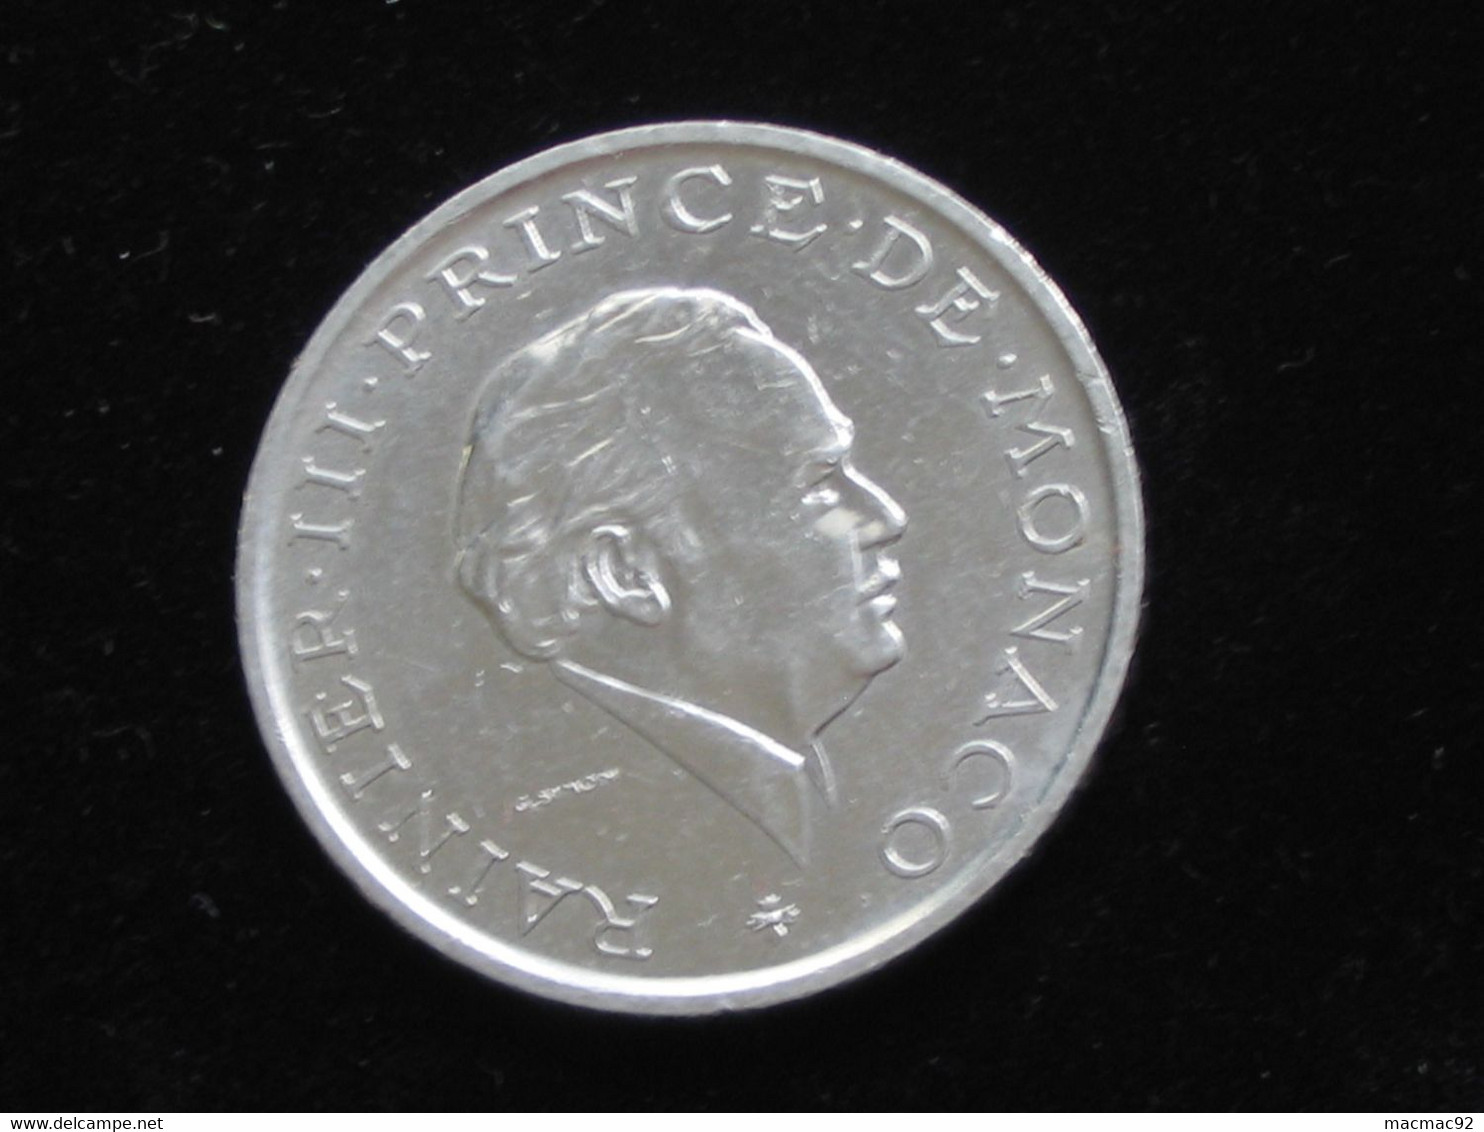 MONACO - 2 Francs 1982 - Rainier III Prince De Monaco **** EN ACHAT IMMEDIAT **** - 1949-1956 Old Francs